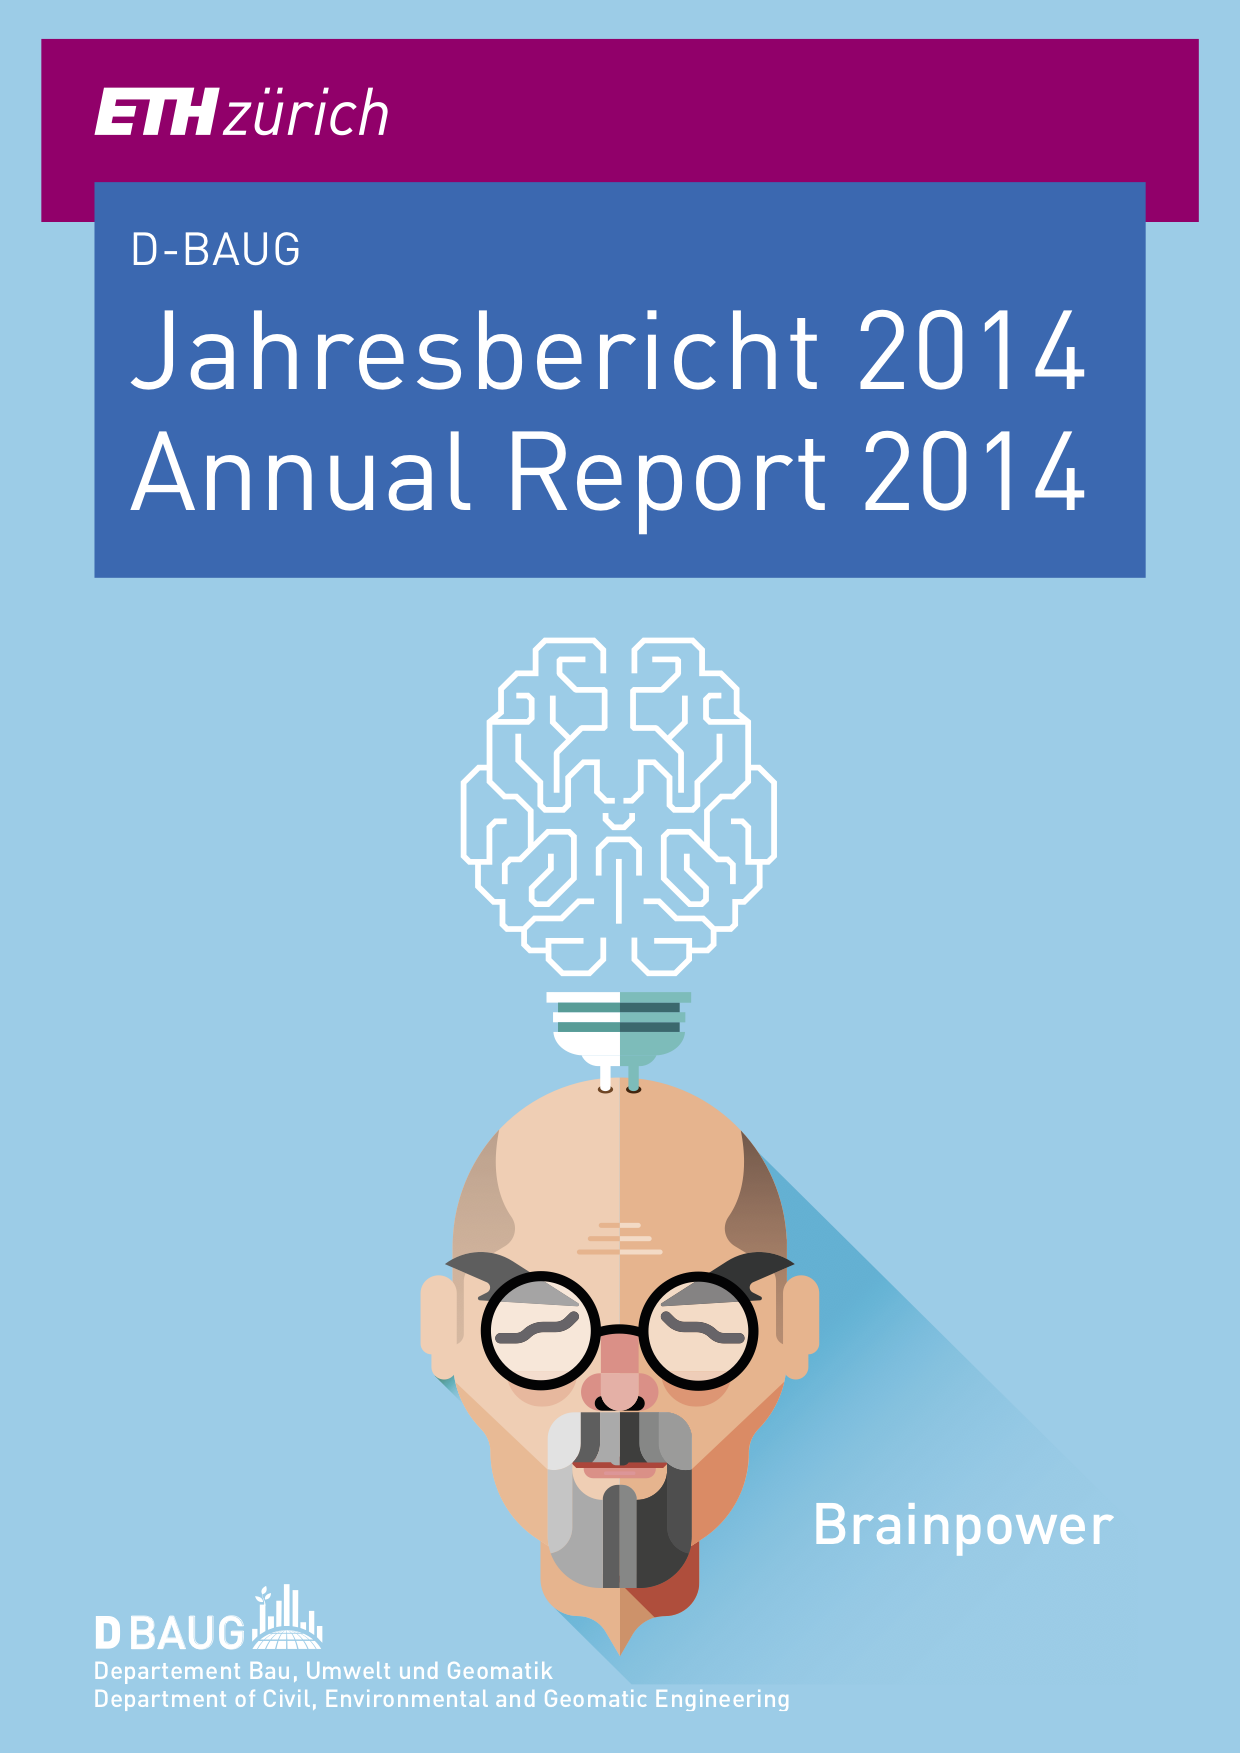 D-BAUG Annual report 2014